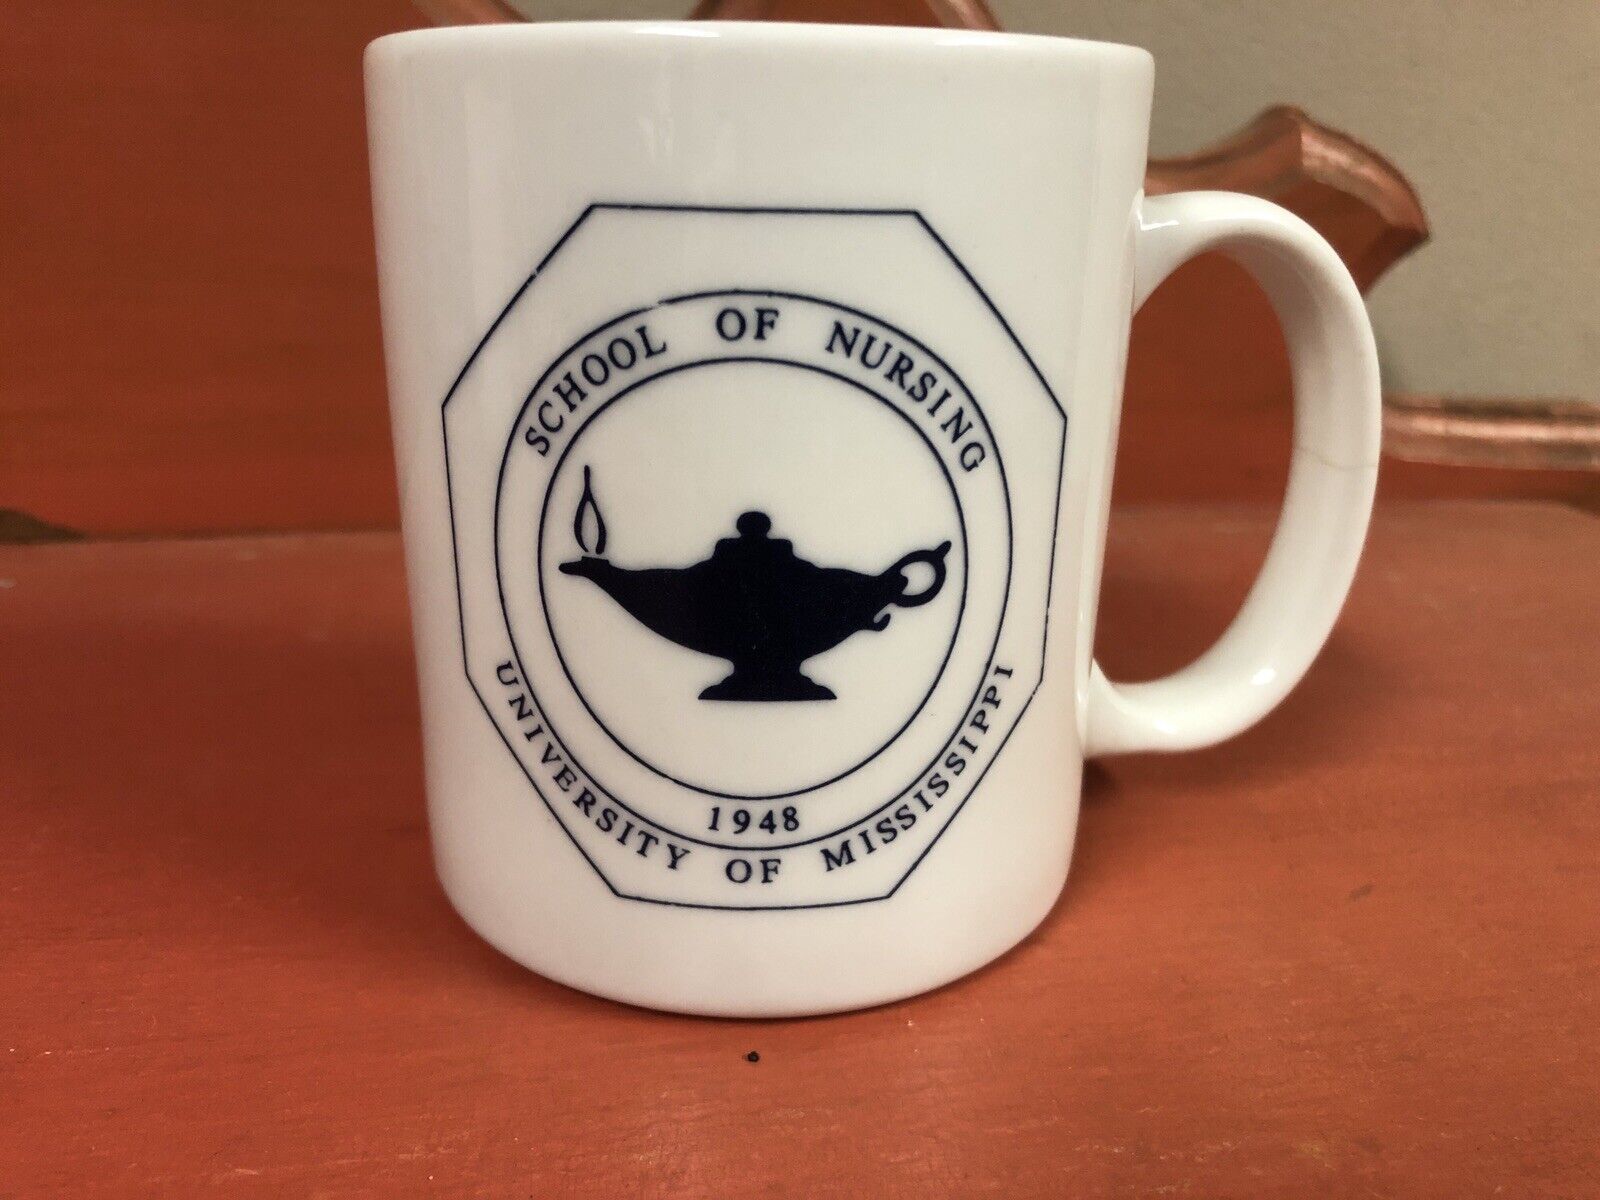 Primary image for Vtg coffee mug University of Mississippi School of Nursing founded 1948 Ole Miss